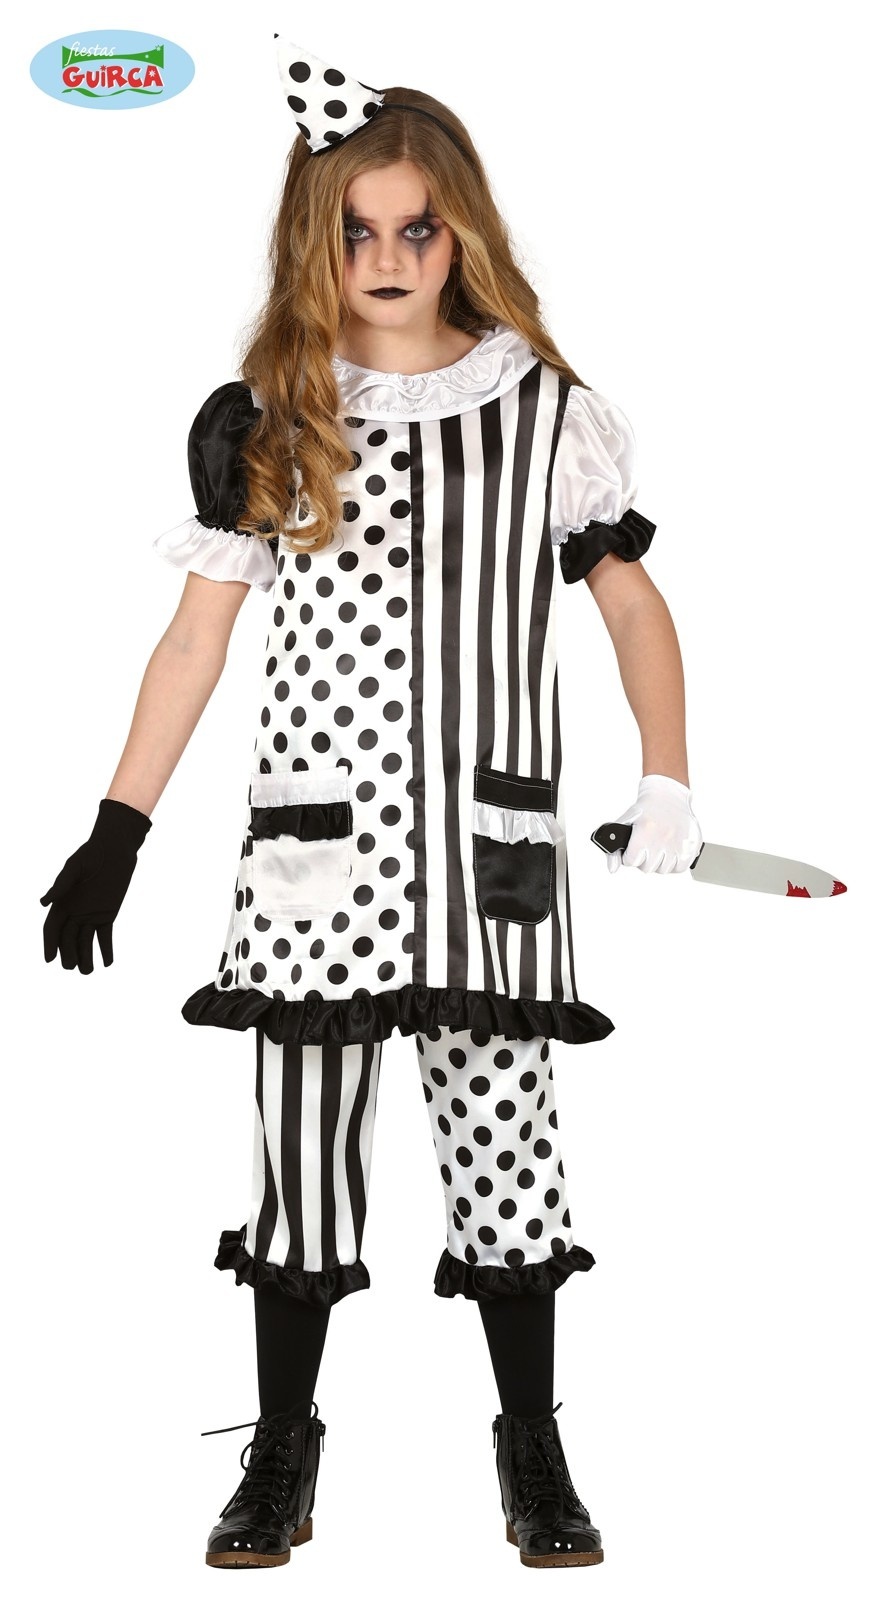 bereik hart Plunderen Horror Clown Kostuum Meisje Zwart/Wit | Halloweenkleding.net